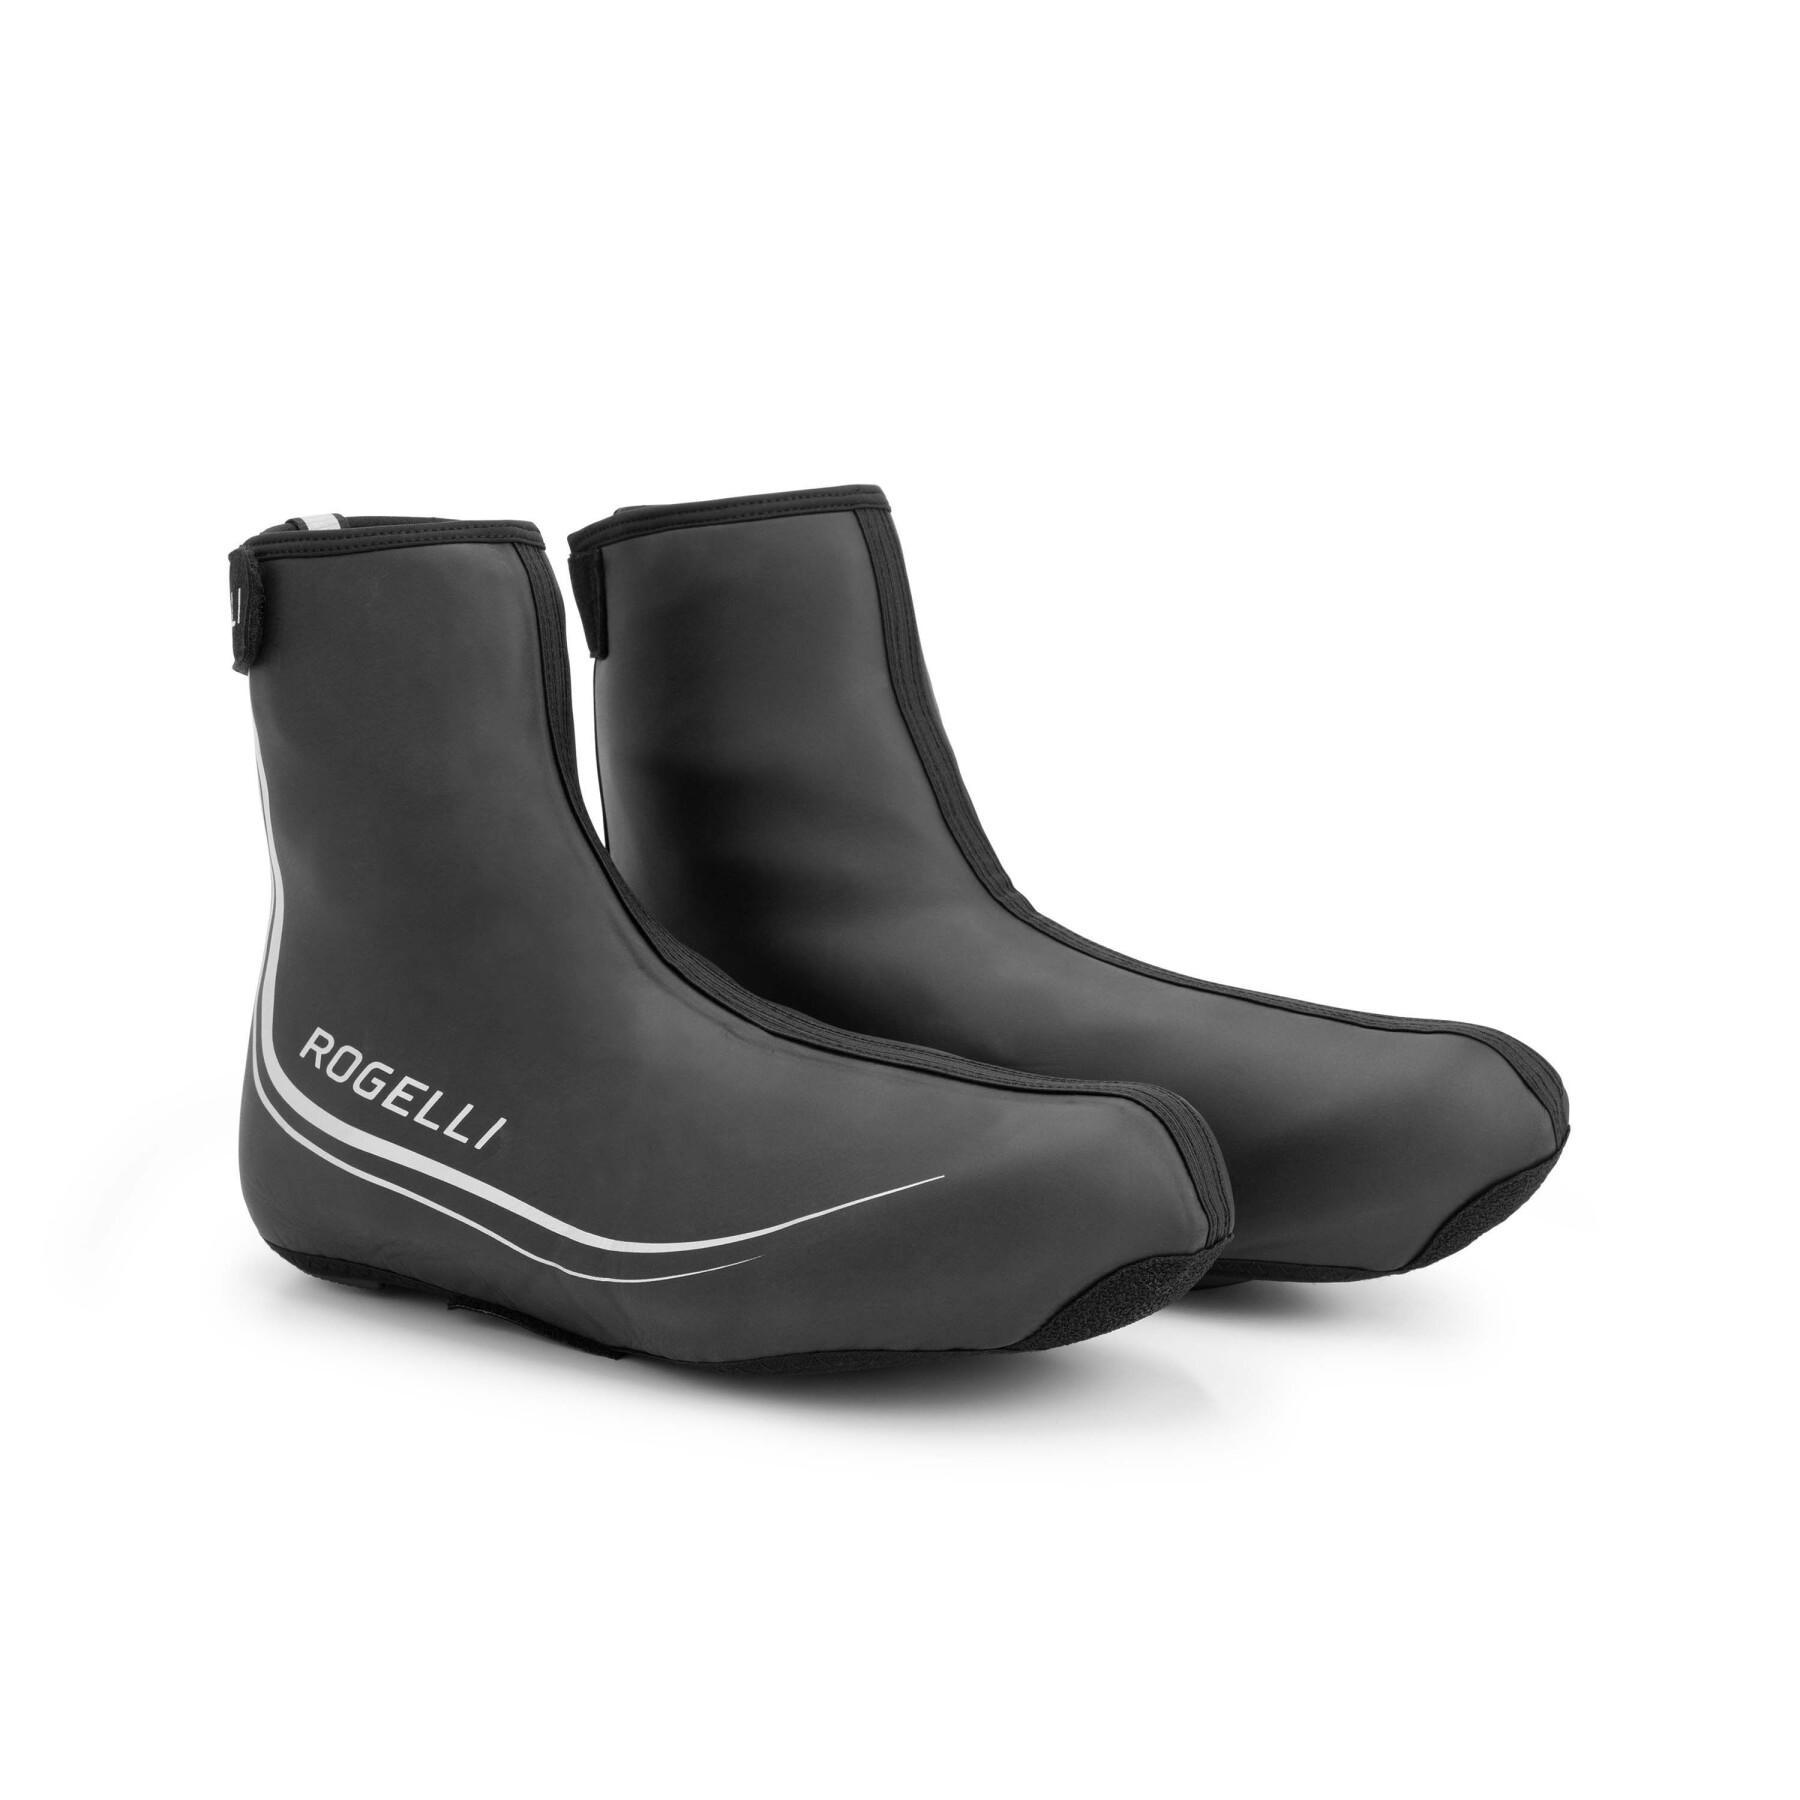 Shoe covers Rogelli Hydrotec